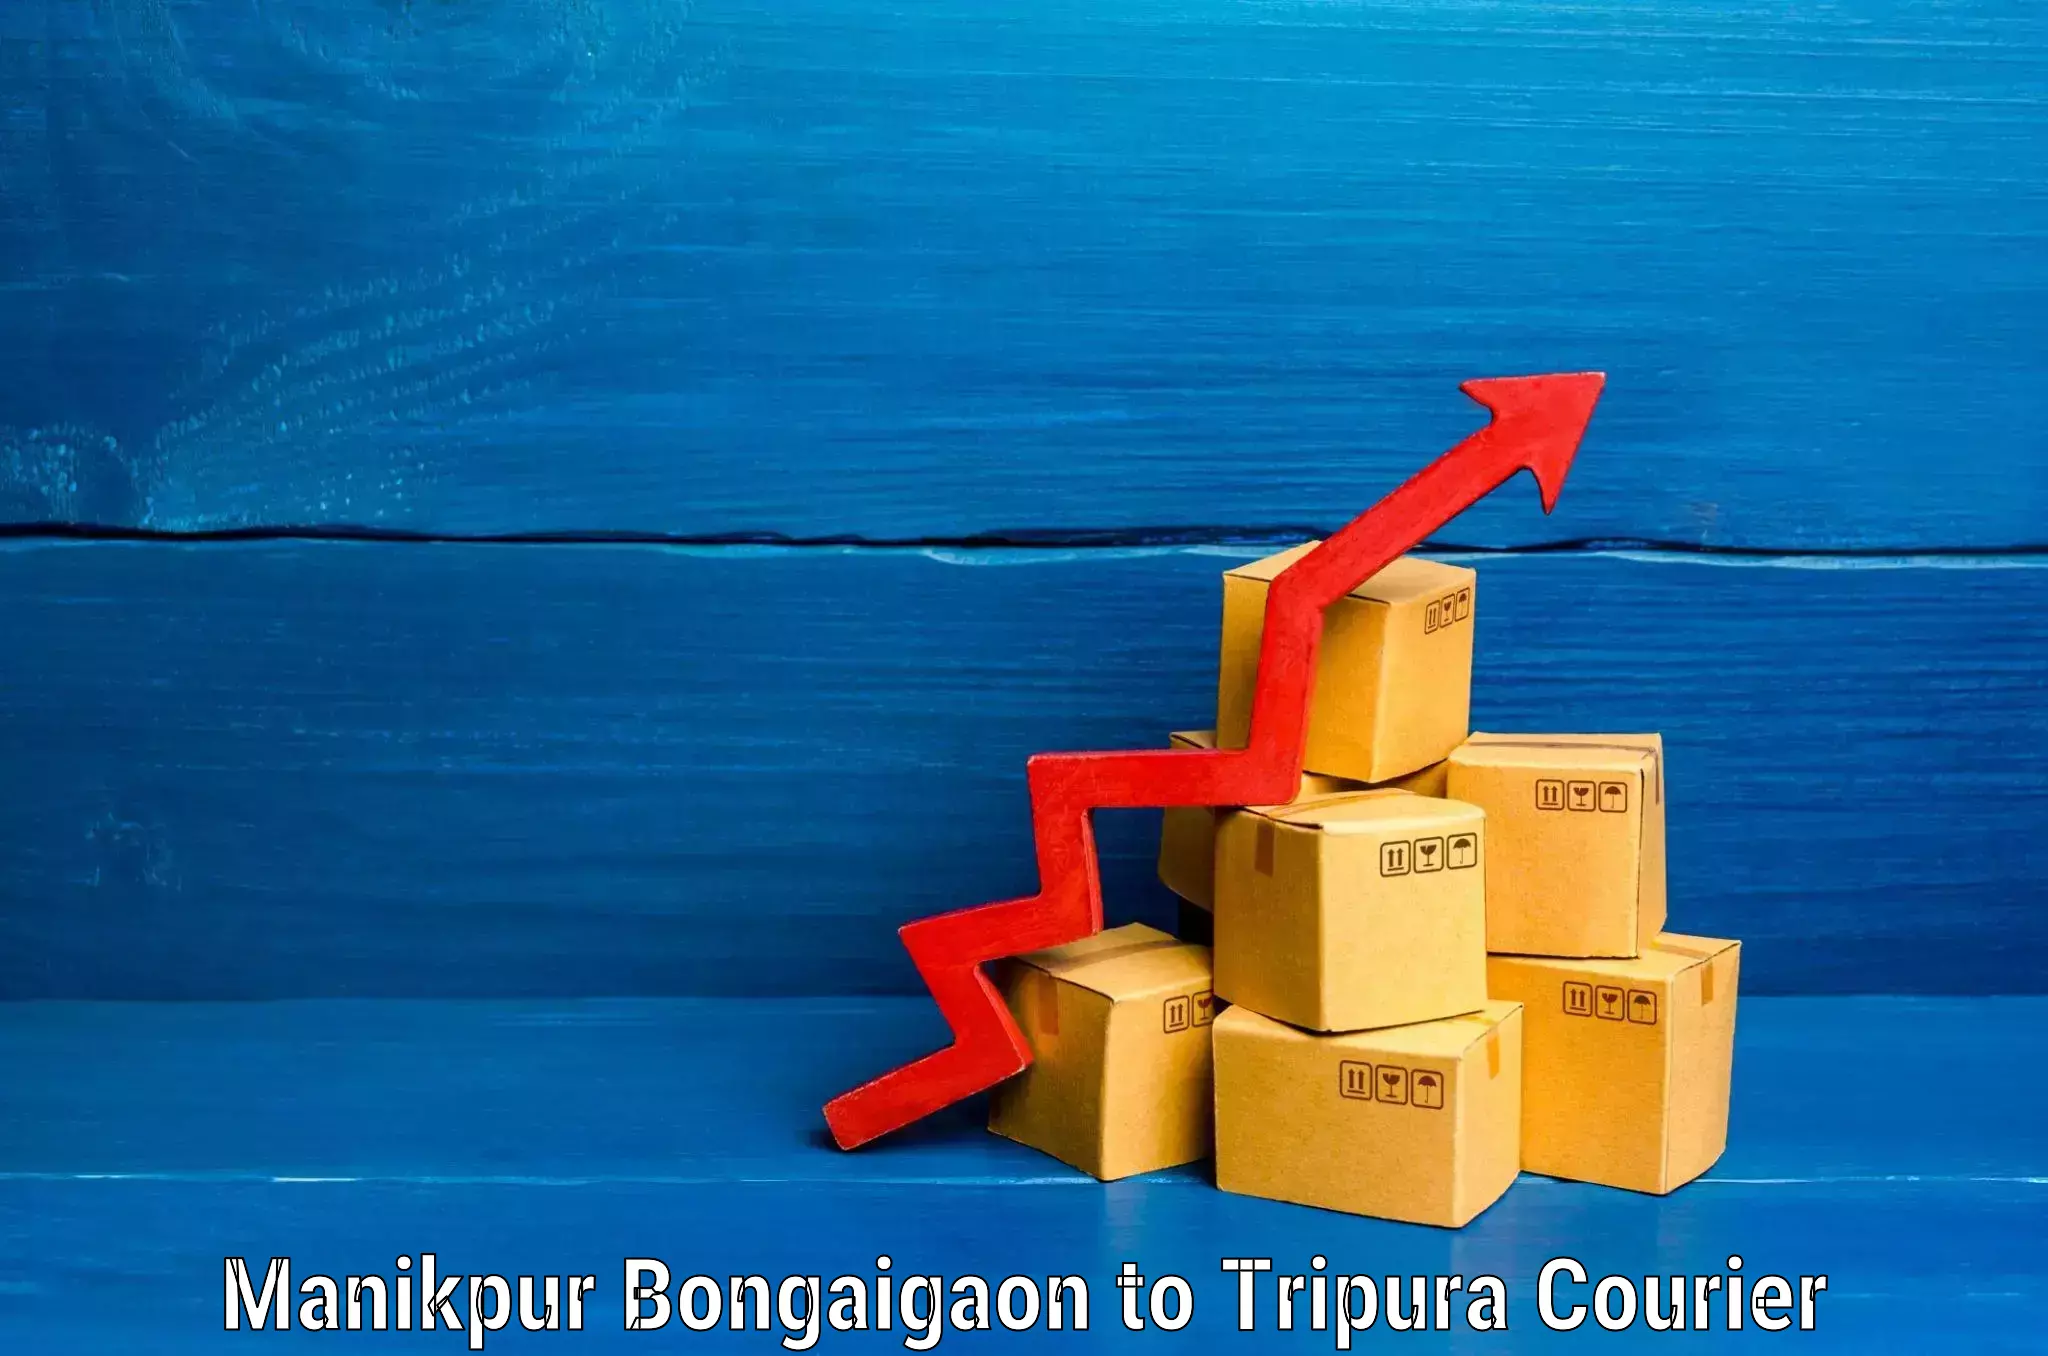 Luggage shipment specialists Manikpur Bongaigaon to North Tripura